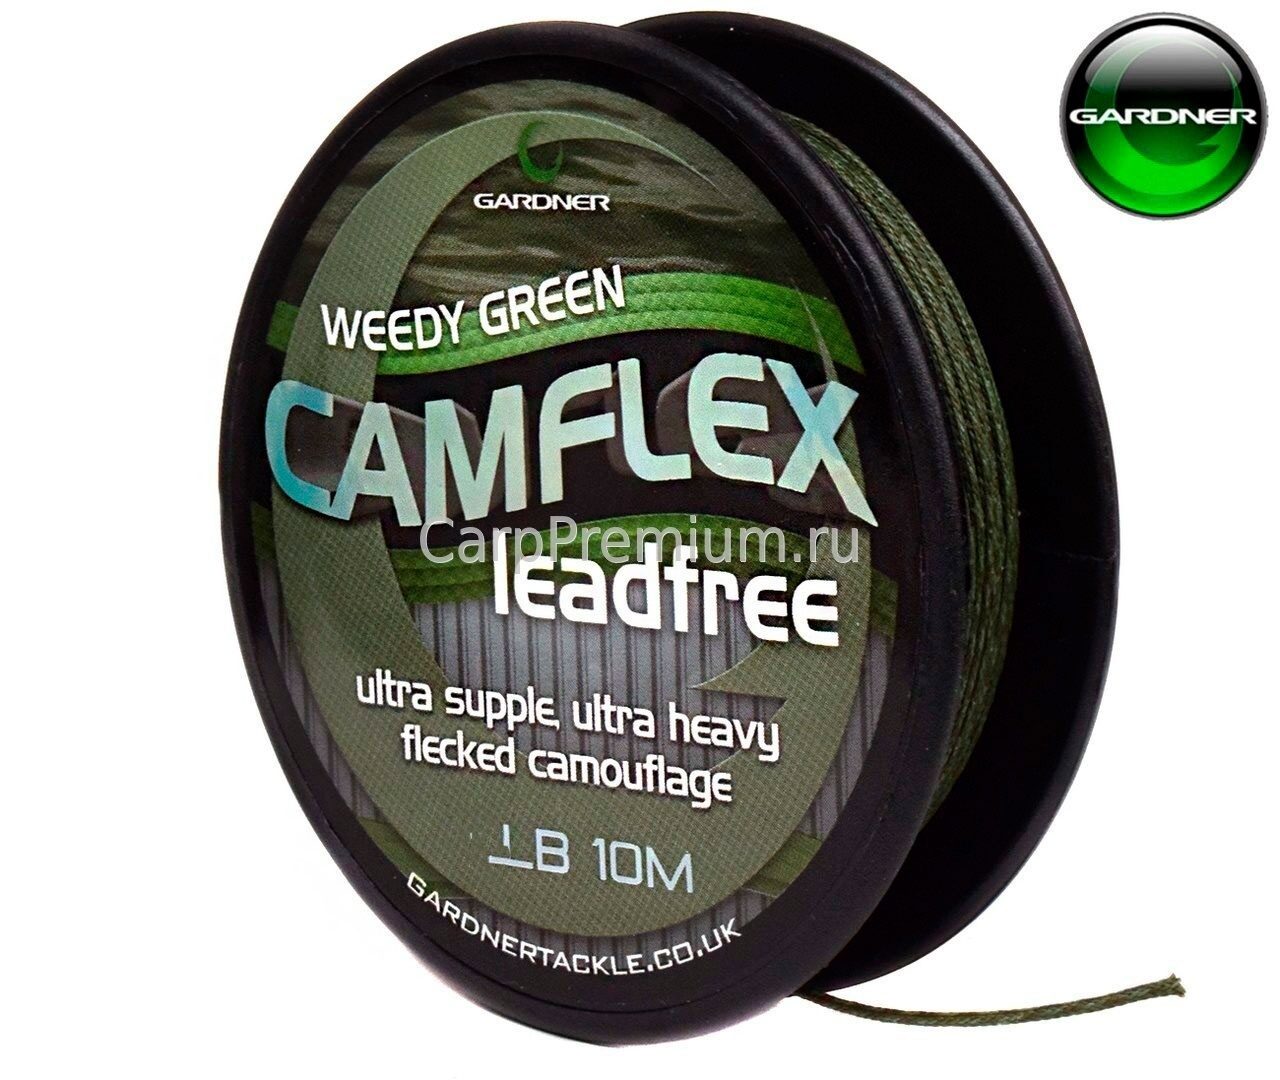 Лидкор без свинцового сердечника Зеленый Gardner (Гарднер) - CamFlex Continental Leadfree Weedy Green 29.5 кг / 65 lb, 10 м